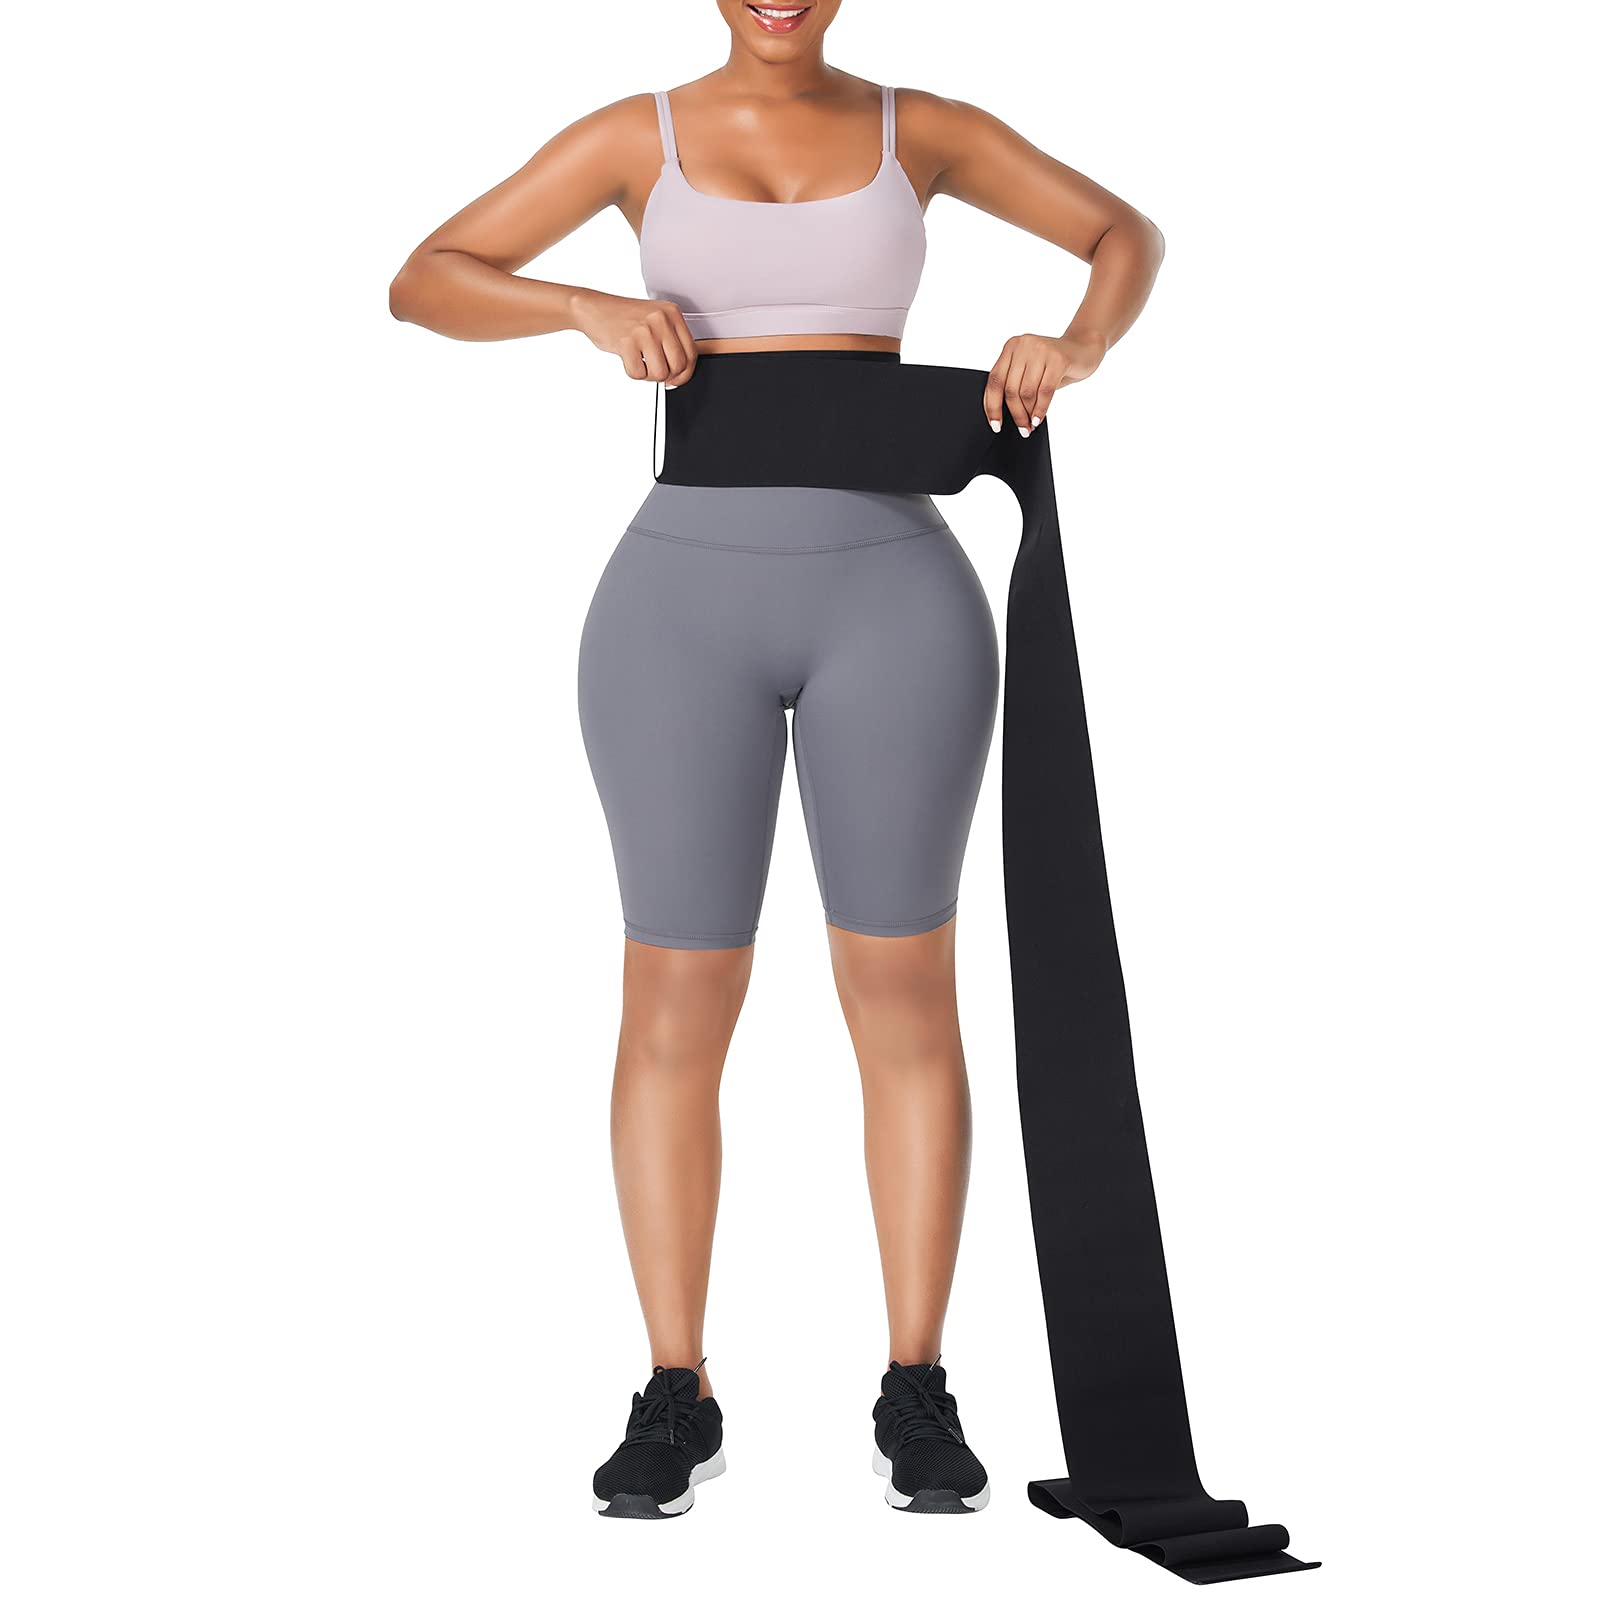 FeelinGirl Waist Trainer for Women Bandage Wrap Sauna Belt Long Torso Tummy  Wraps Belly Body Shaper Waist Trimmer Belt One Size Aa/Black - One Size